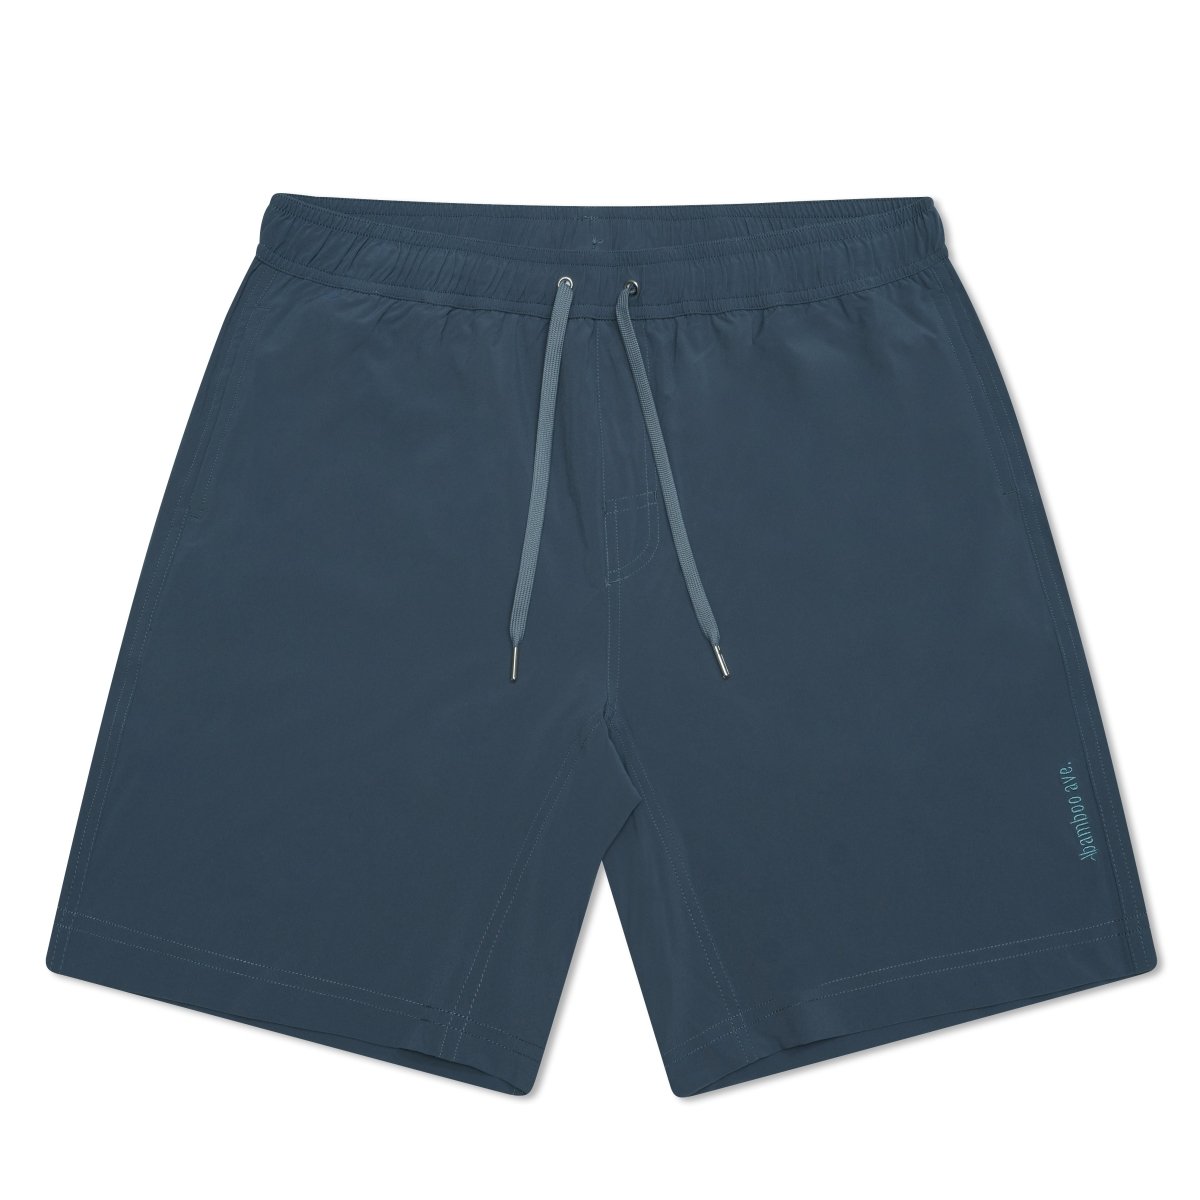 Sky Walker 9” - Slate Grey Shorts - Bamboo Ave. - Men's Shorts